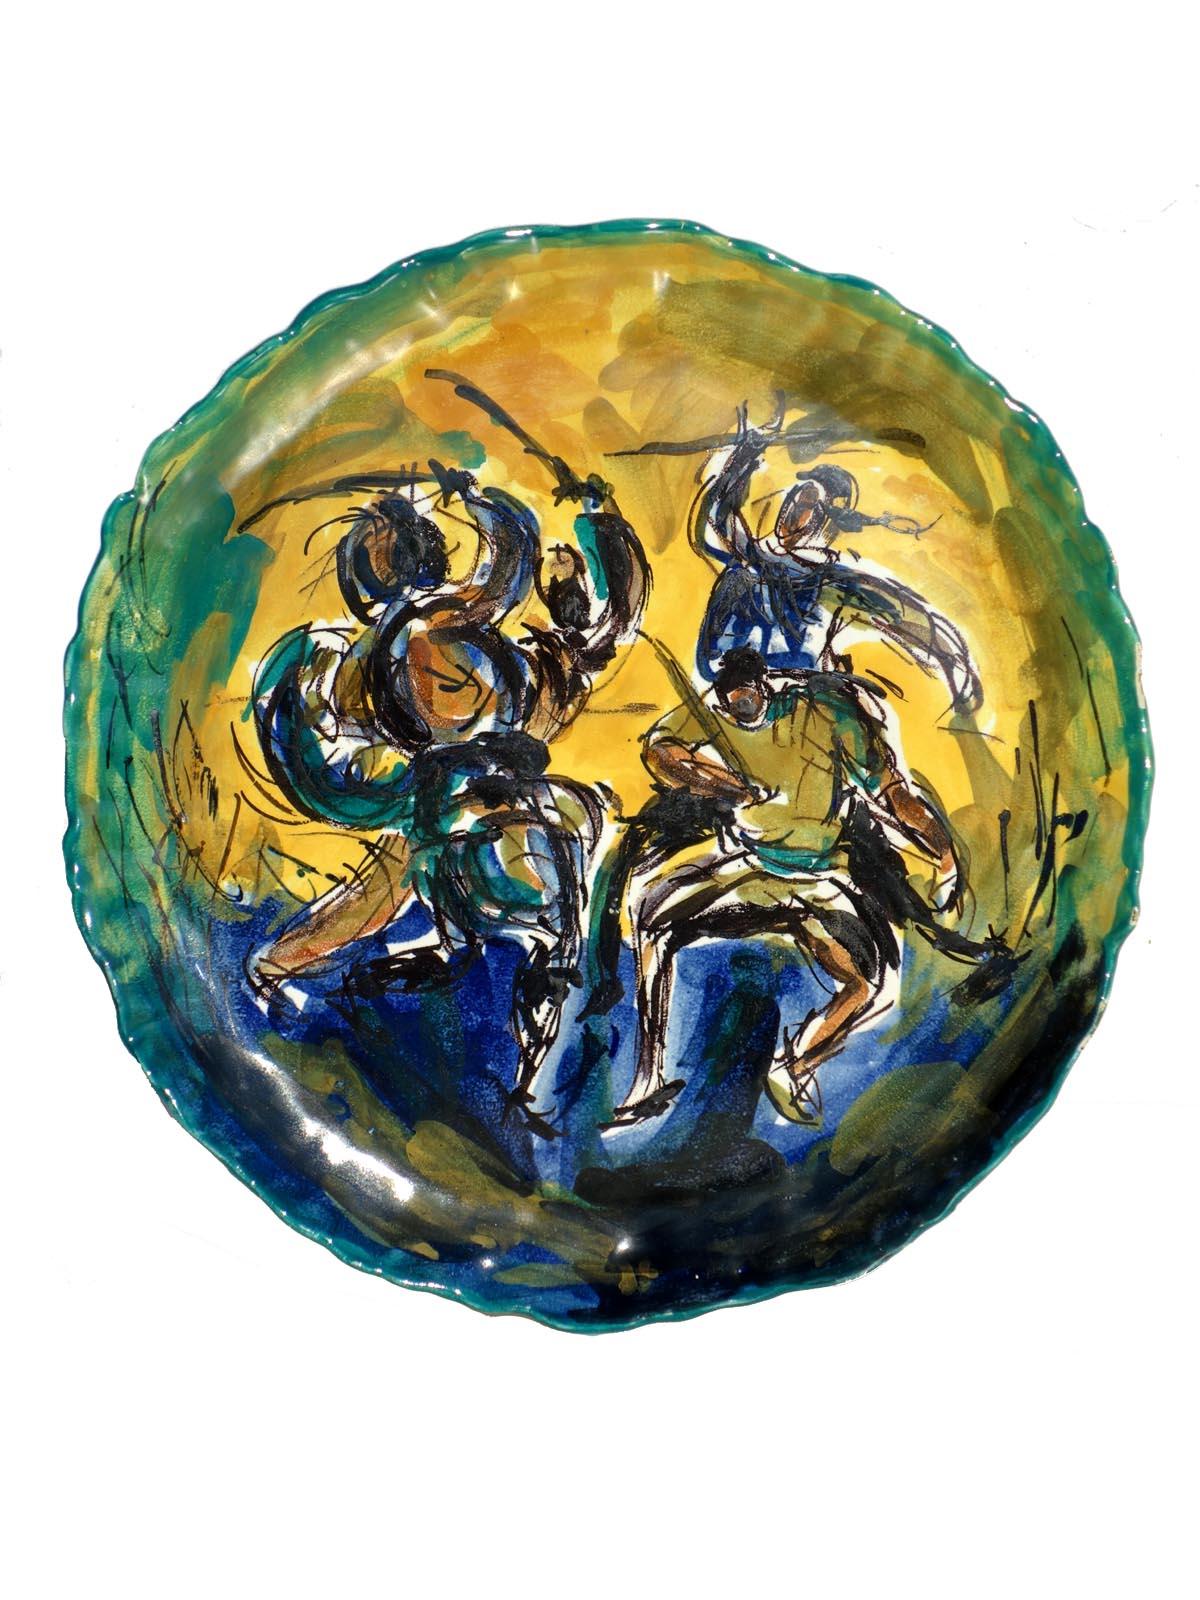 Gigi Caldanzano
MGA, Albisola
Italie, 1950-1960

Set de 6 assiettes en céramique
Scènes polychromes peintes au feu 

Excellentes conditions
Signature de l'artiste 